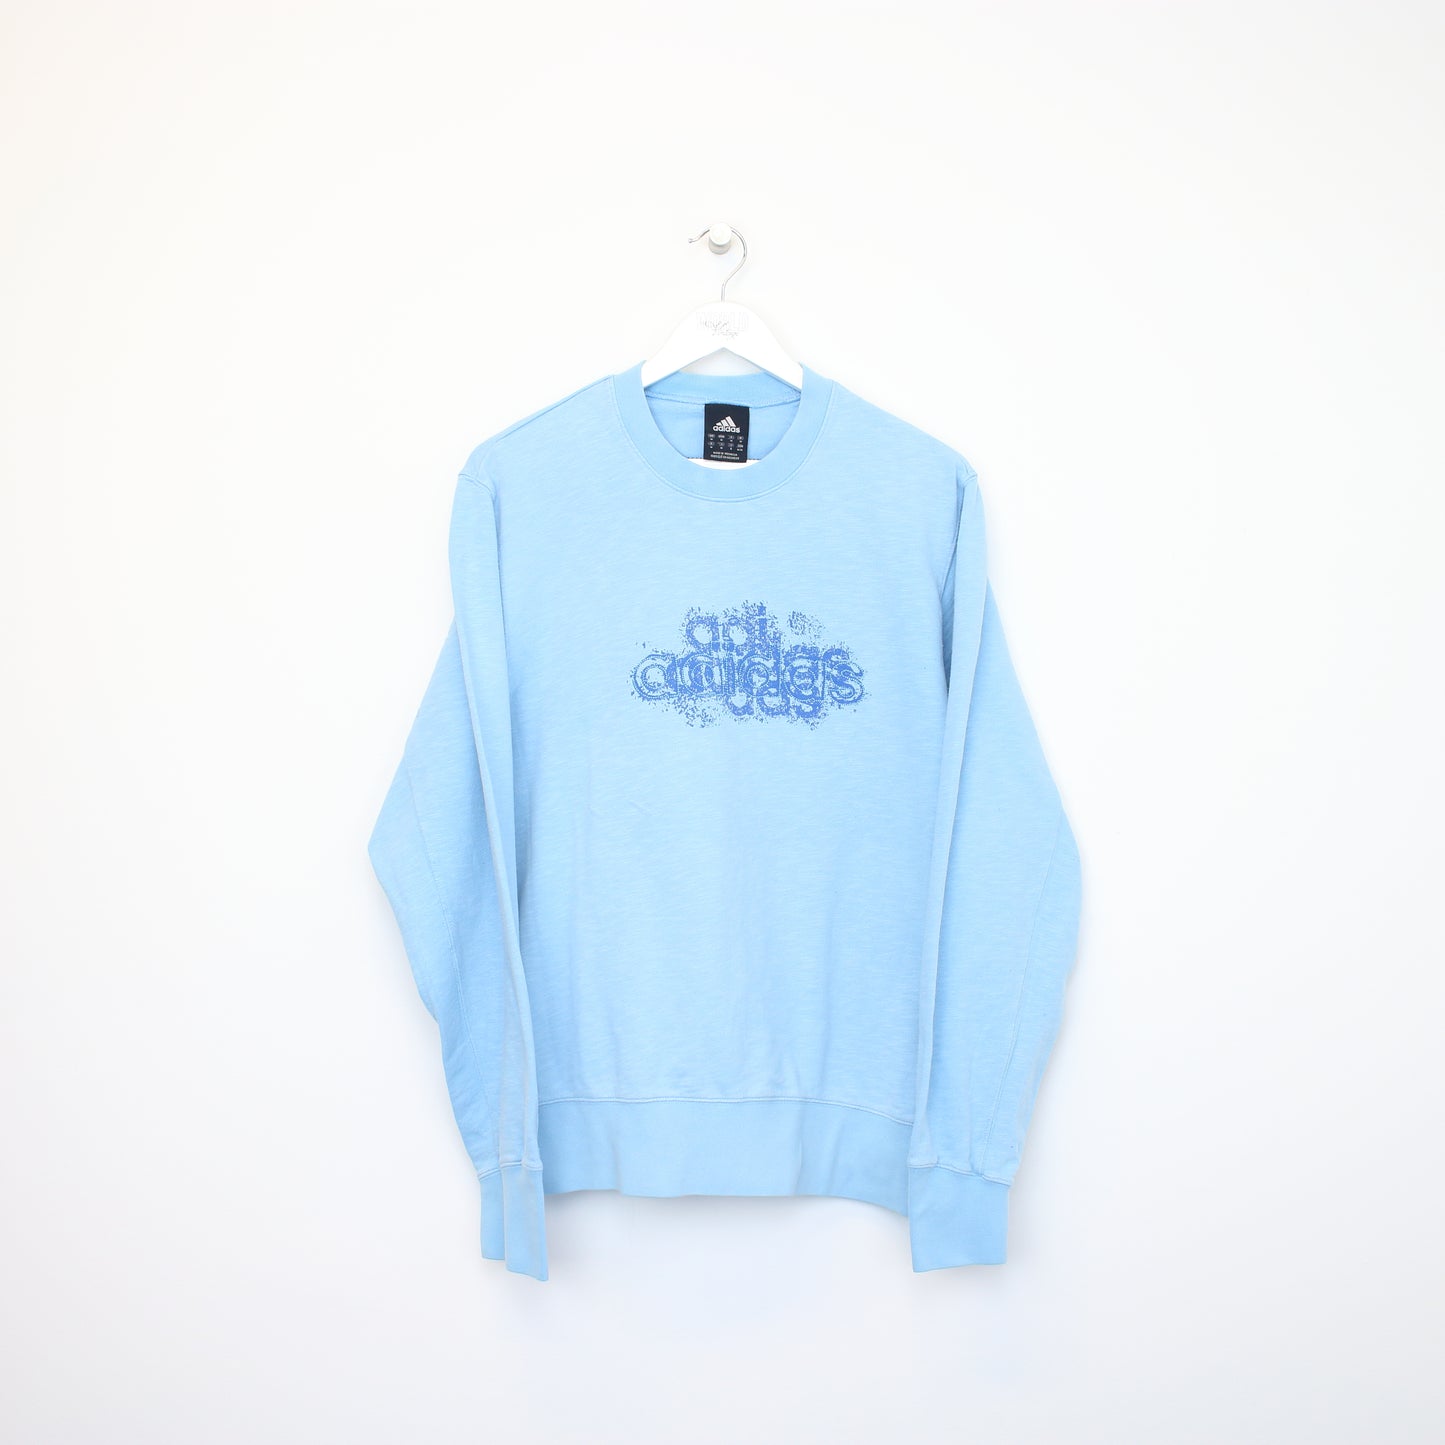 Vintage Adidas sweatshirt in light blue. Best fits M